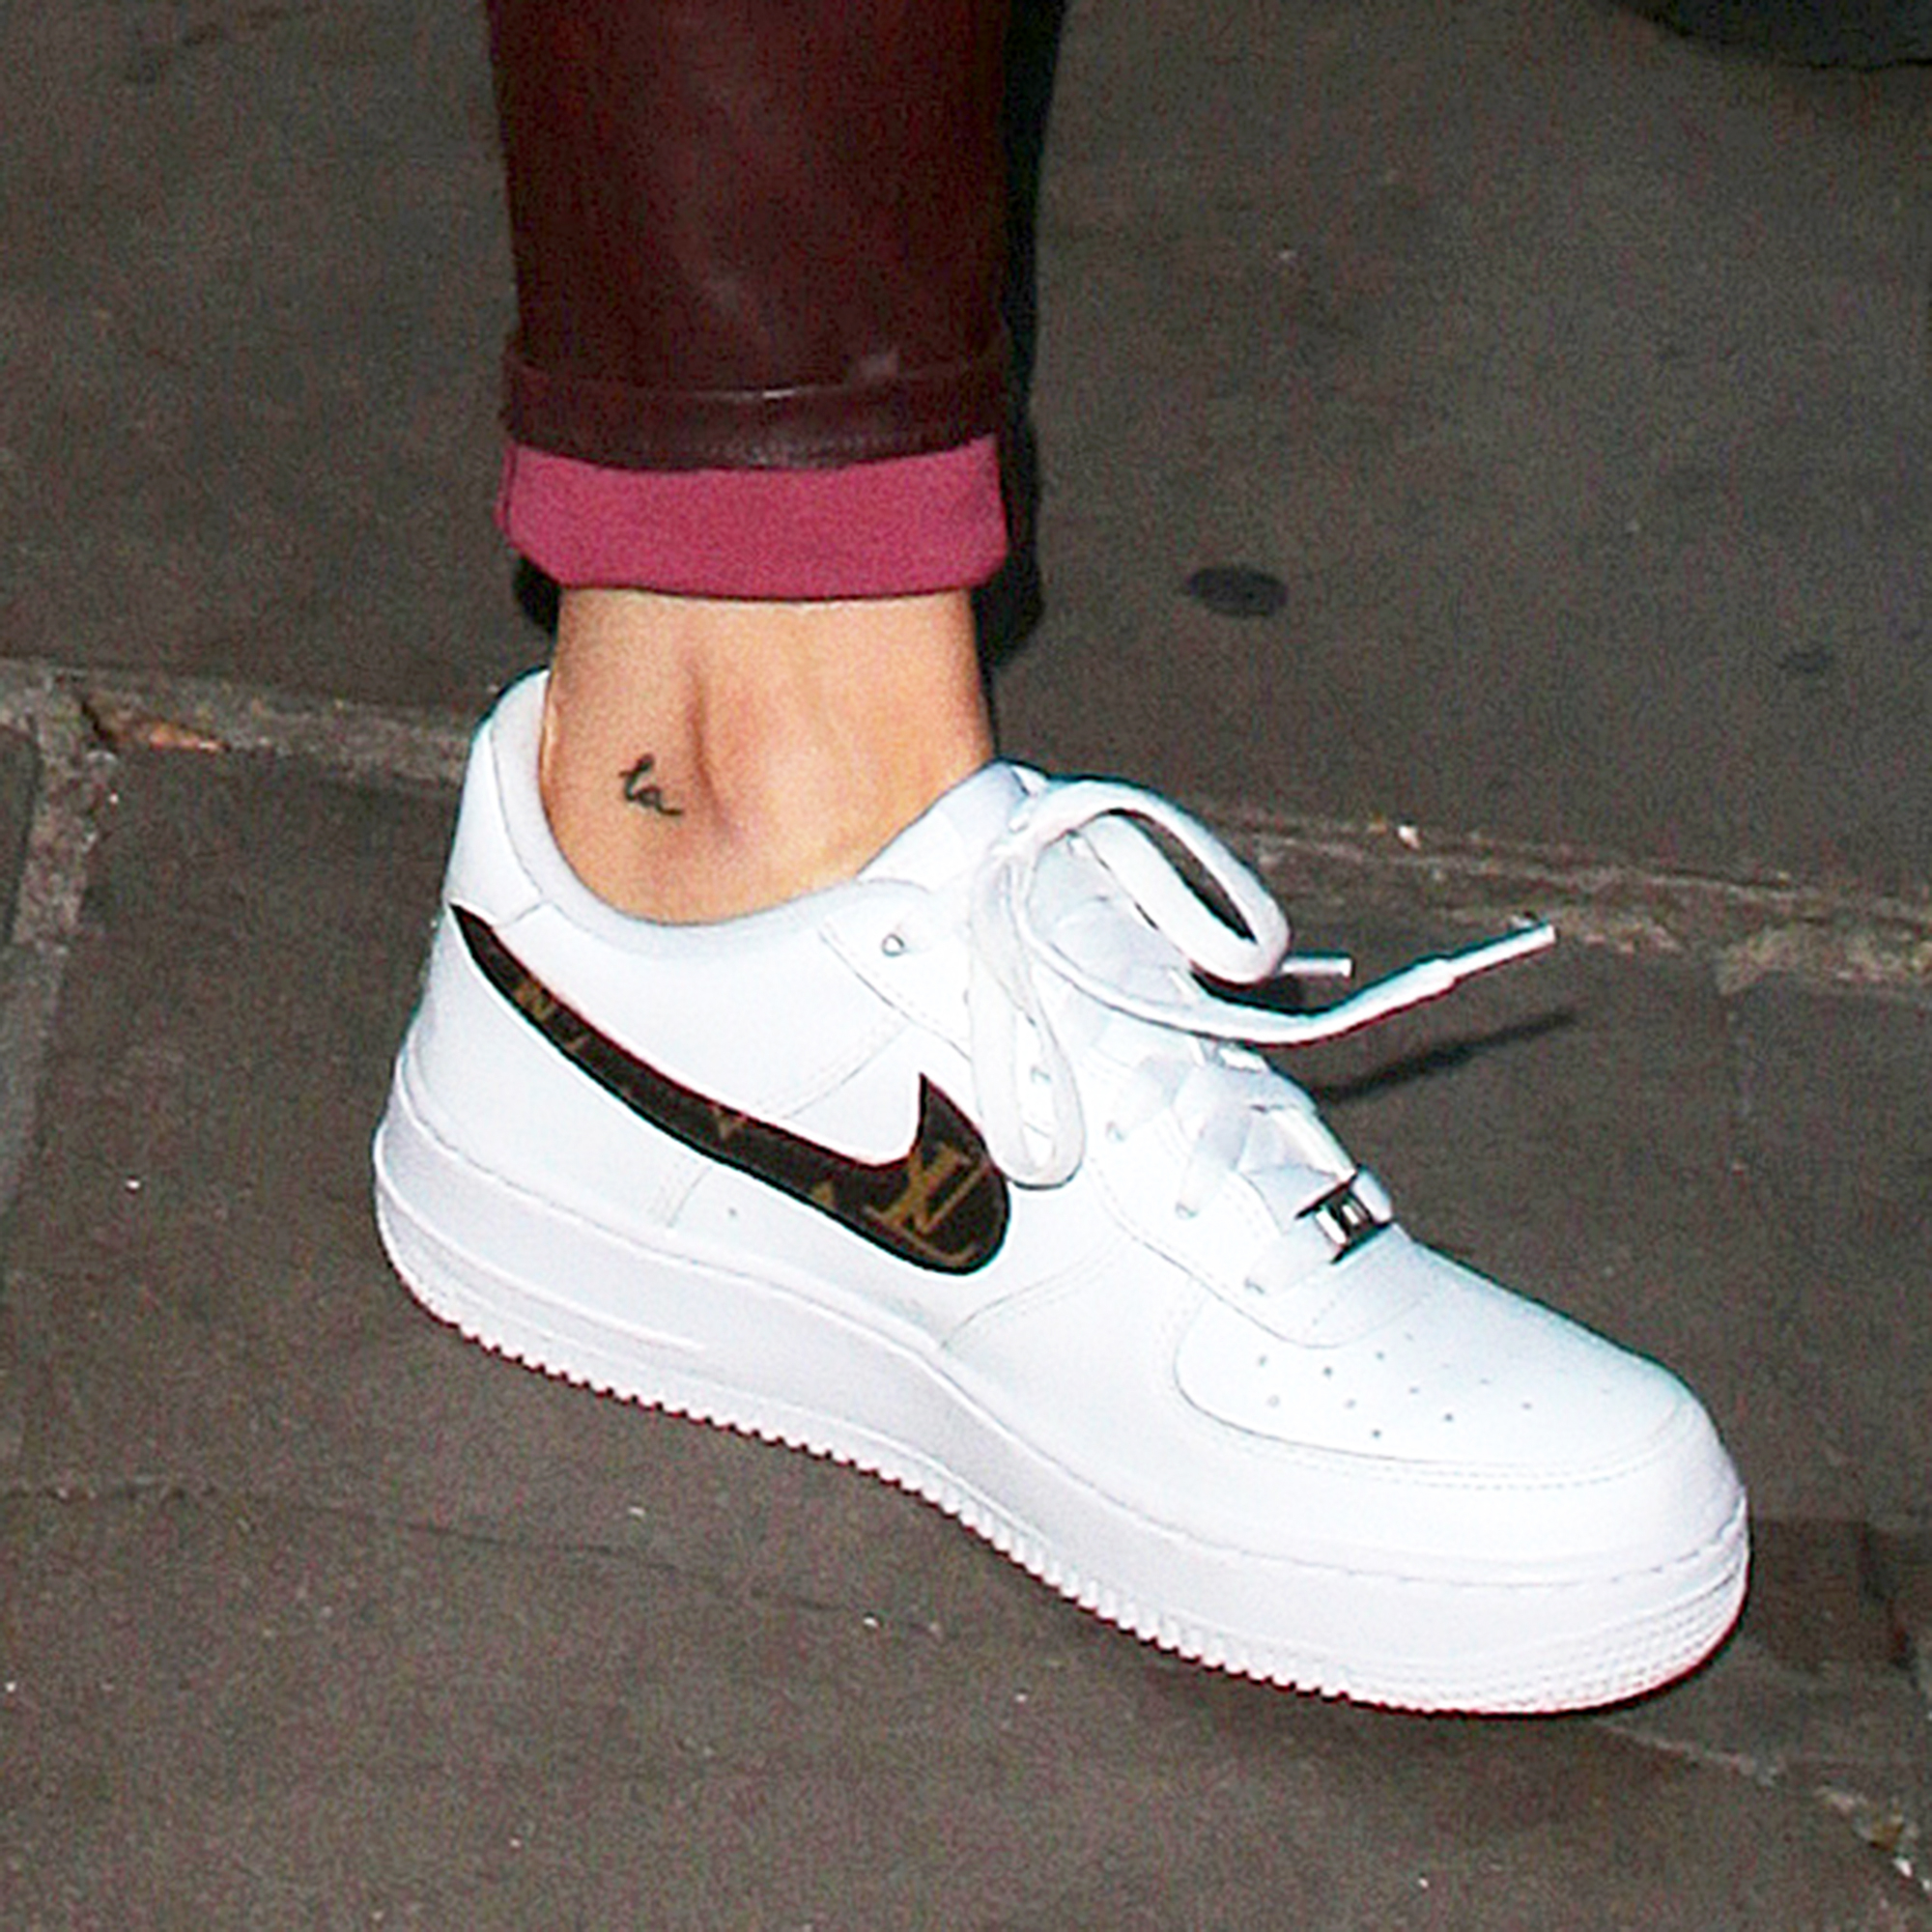 Tyga gets Kylie Jenner tattoo on arm  newscomau  Australias leading  news site